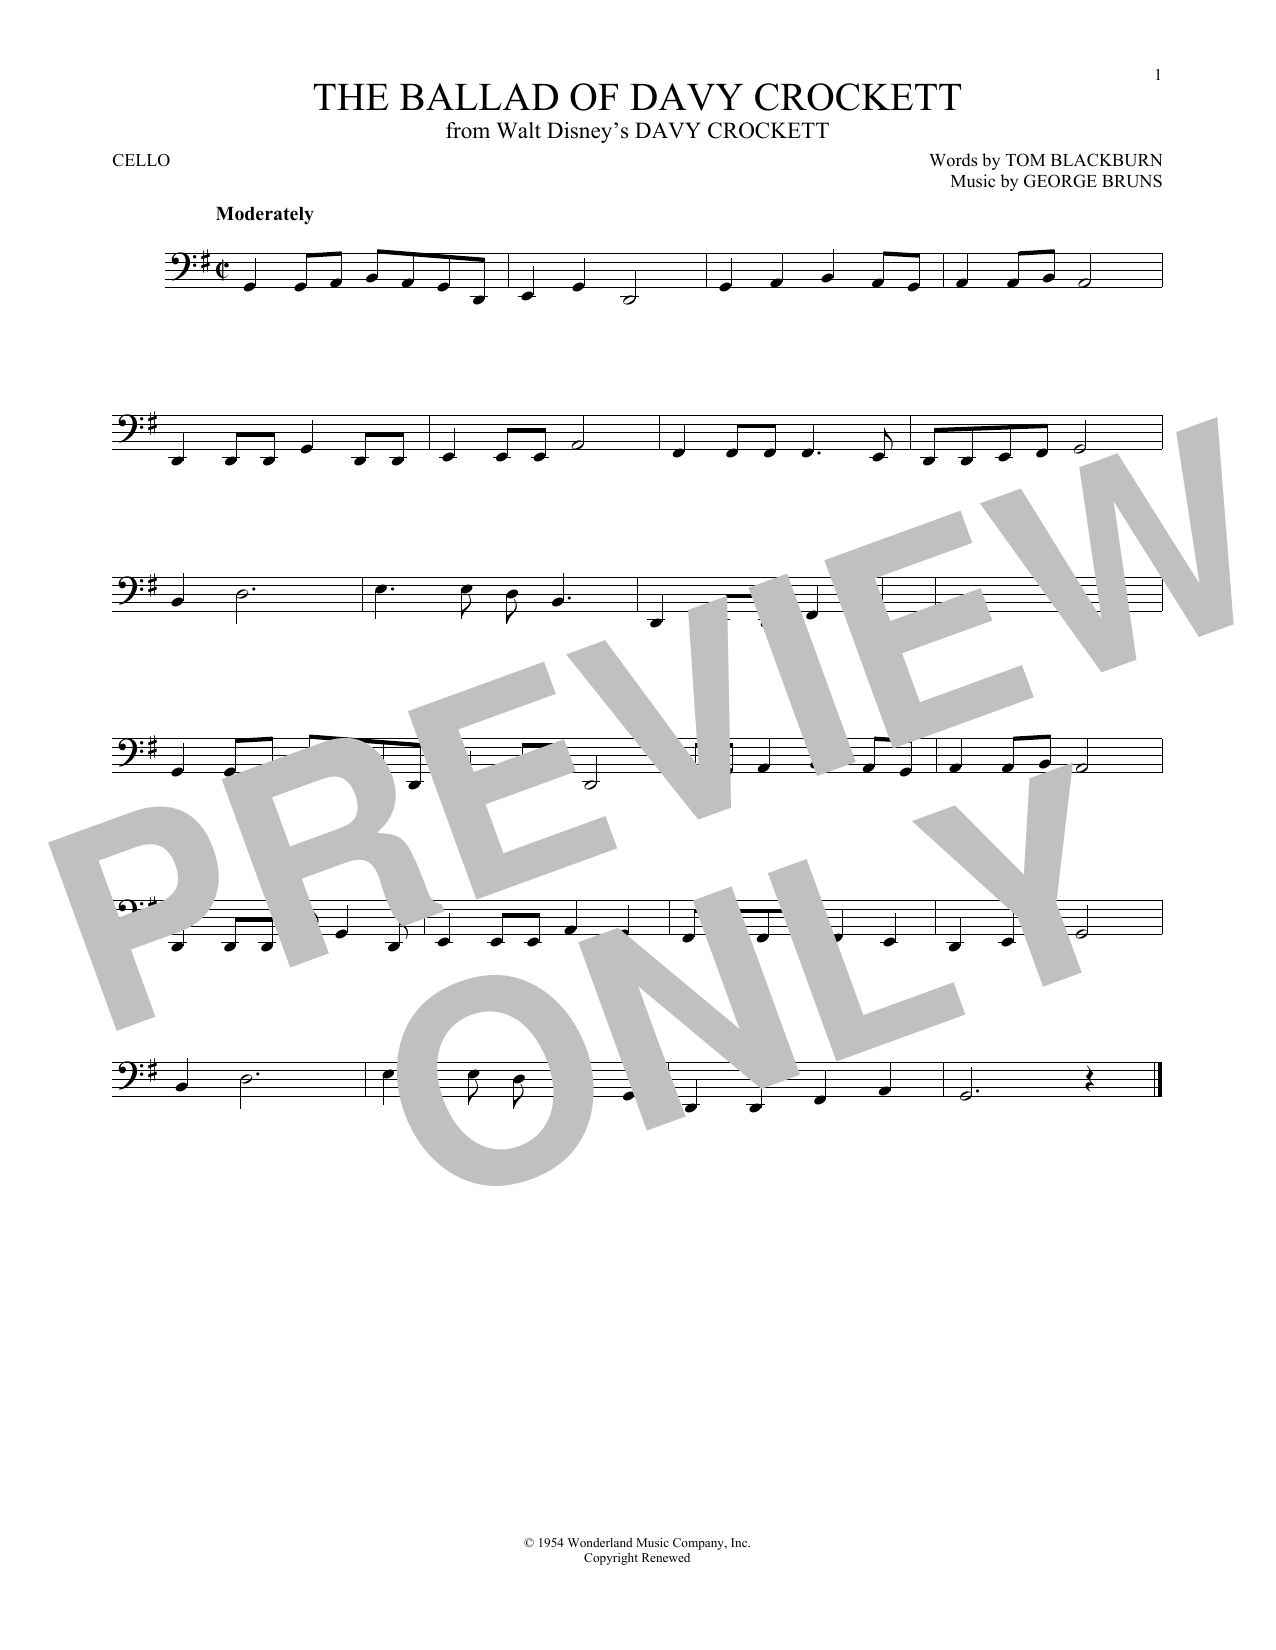 Download George Bruns The Ballad Of Davy Crockett Sheet Music